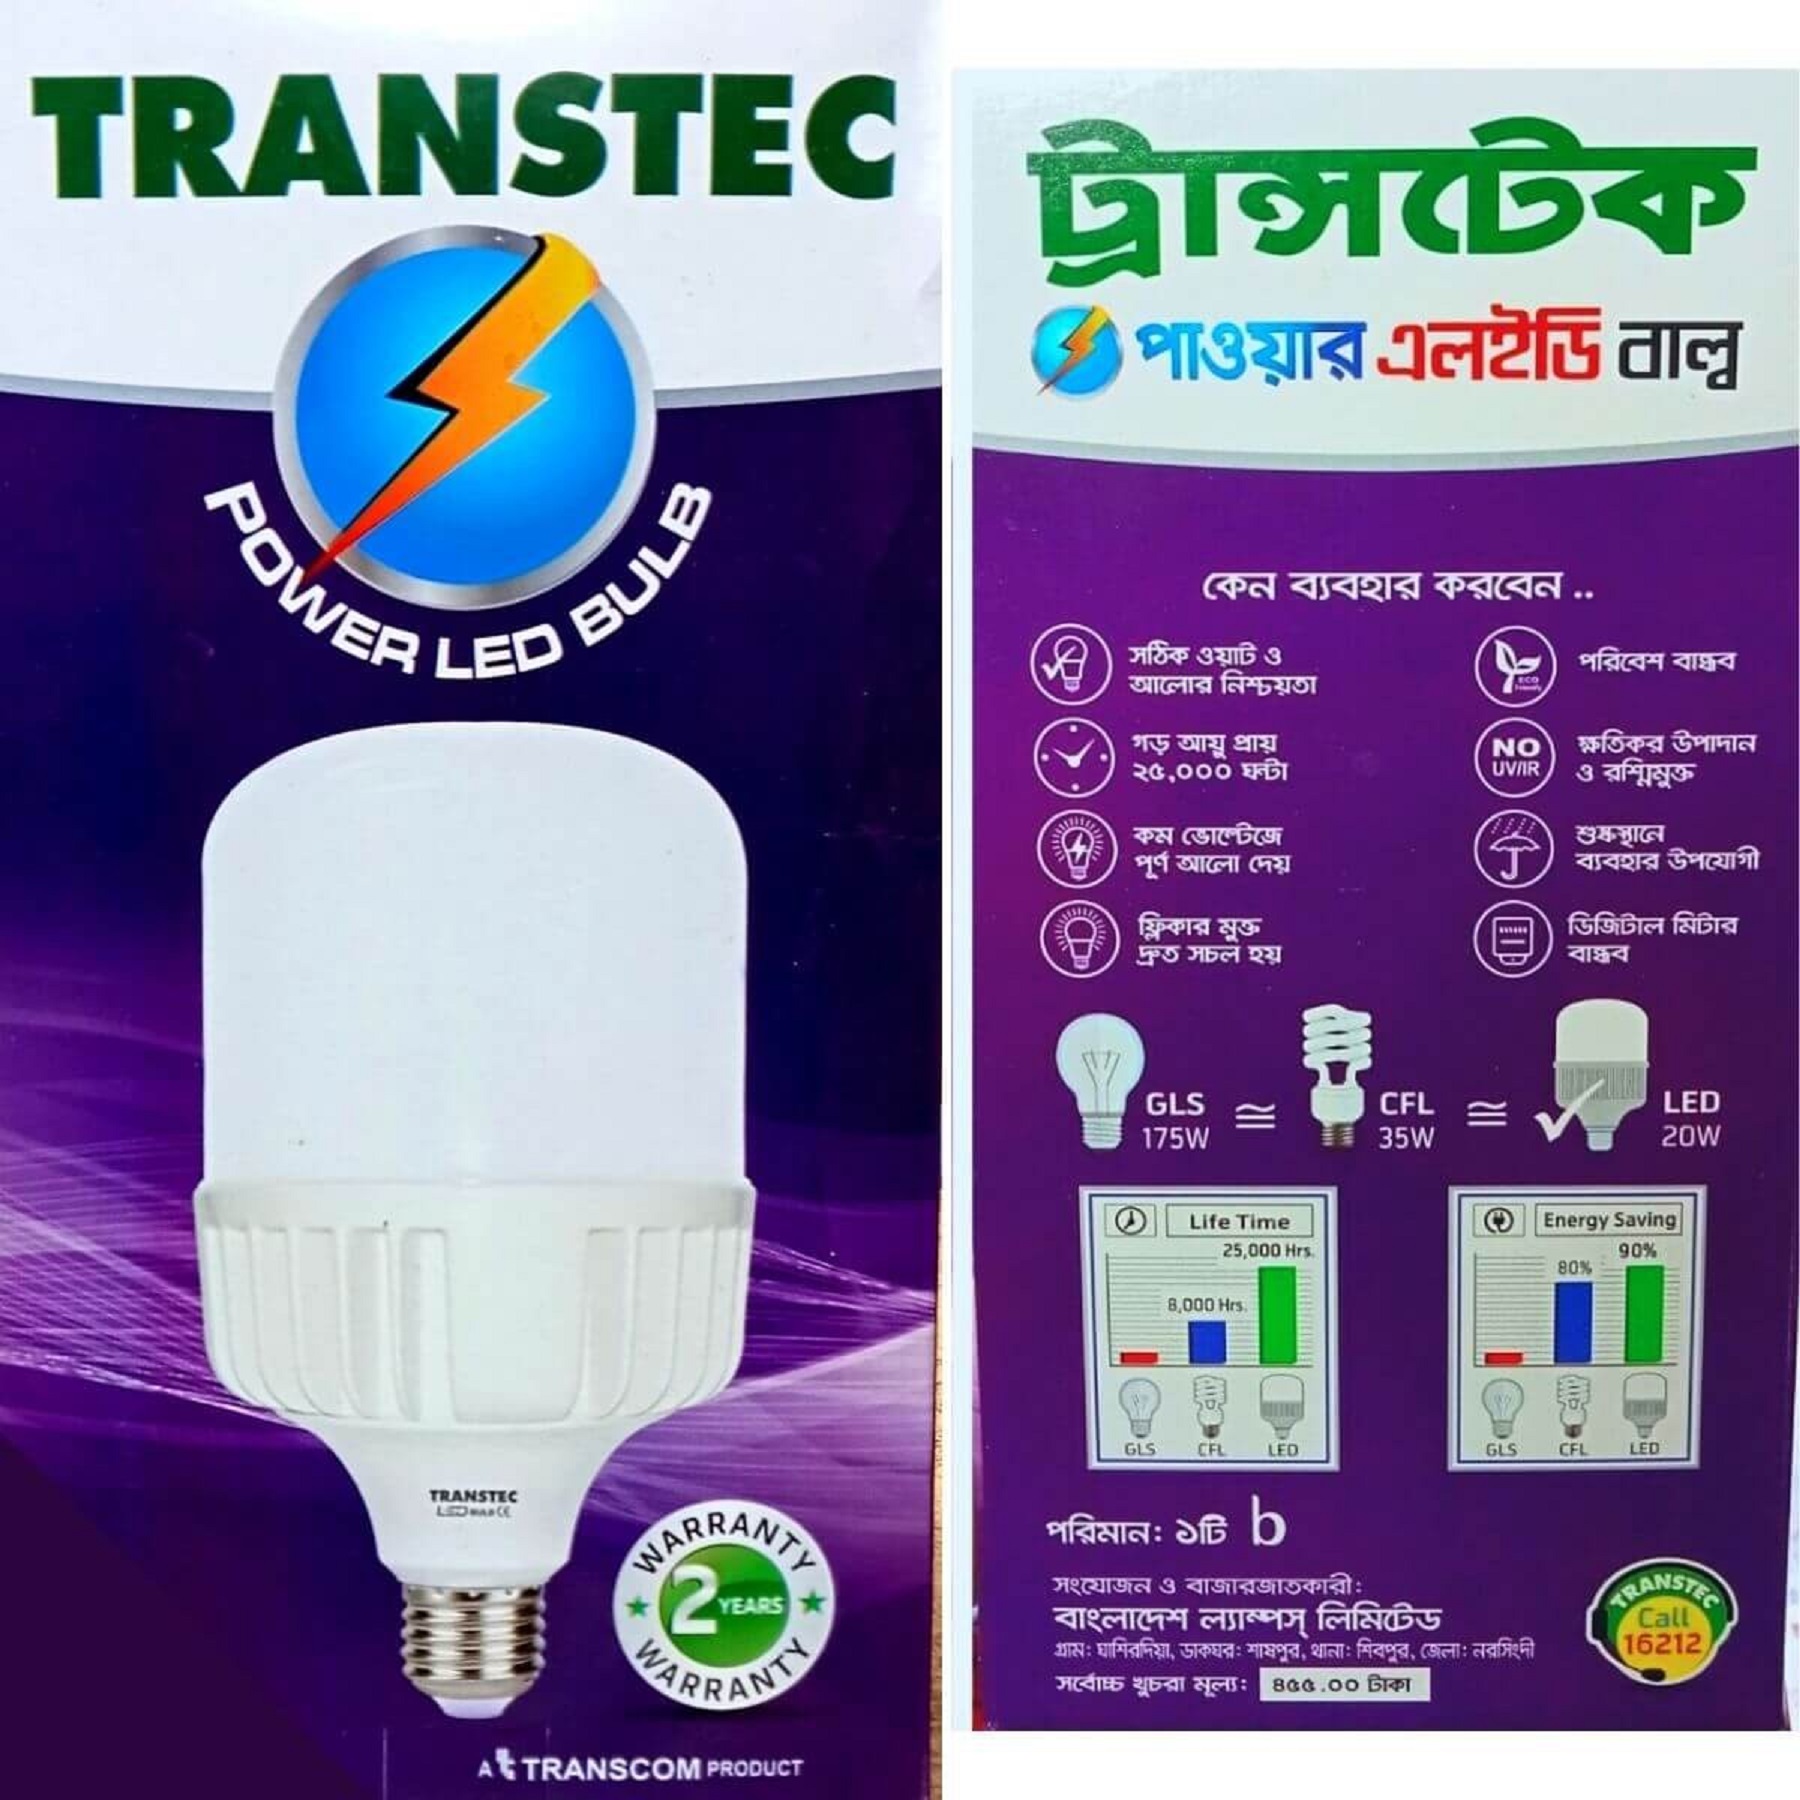 Transtec Bright 30Watt LED Bulb প্যাচ টাইপ... BD